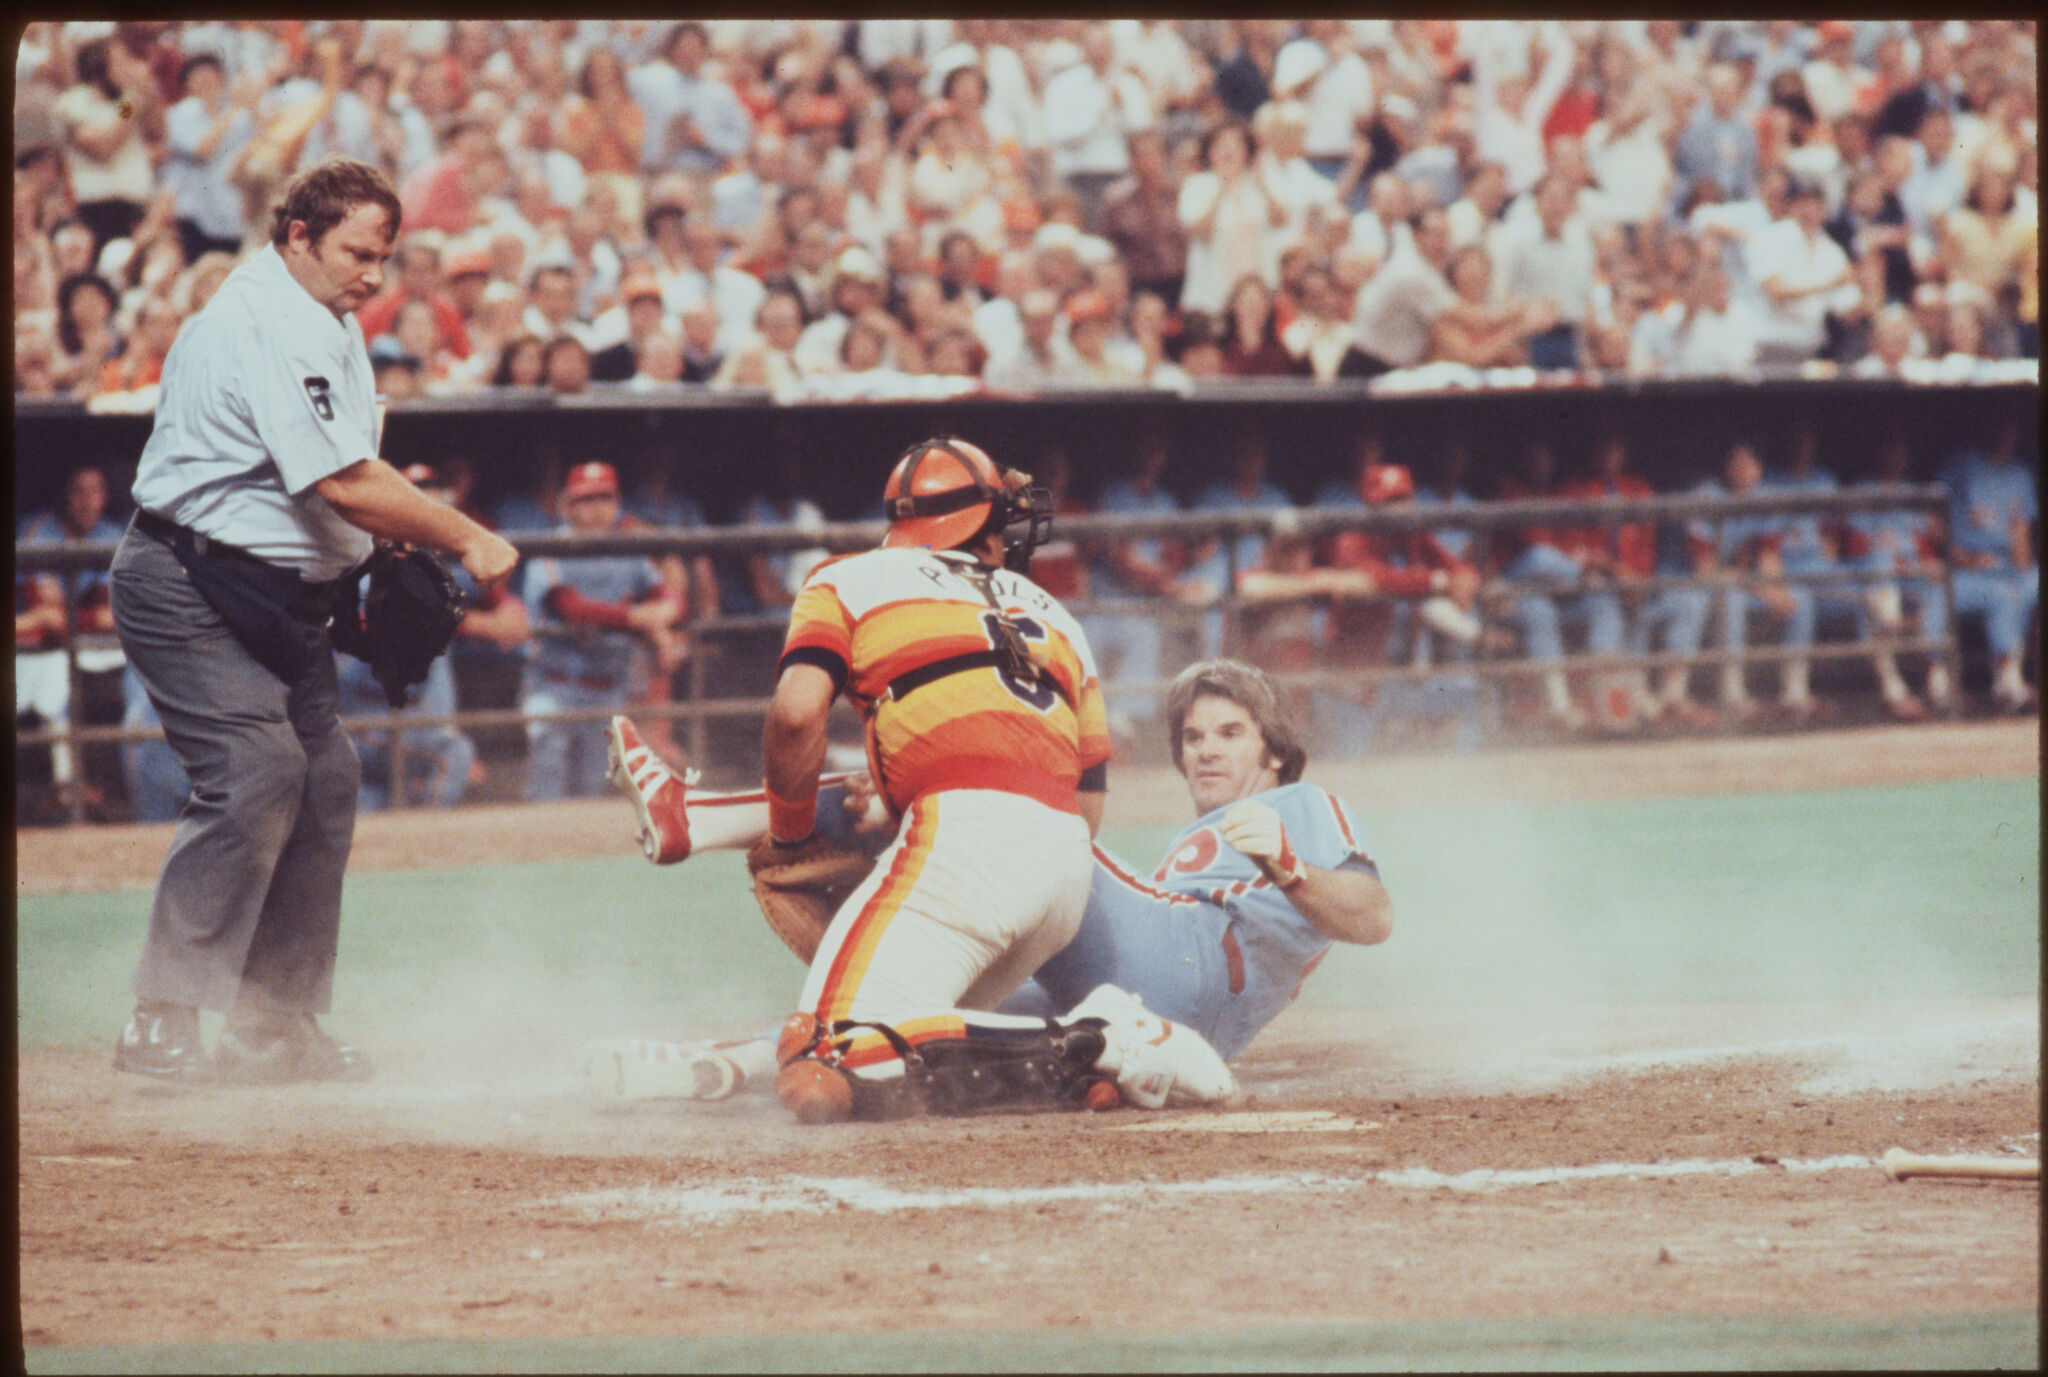 Remembering Phillies' 1980 championship season